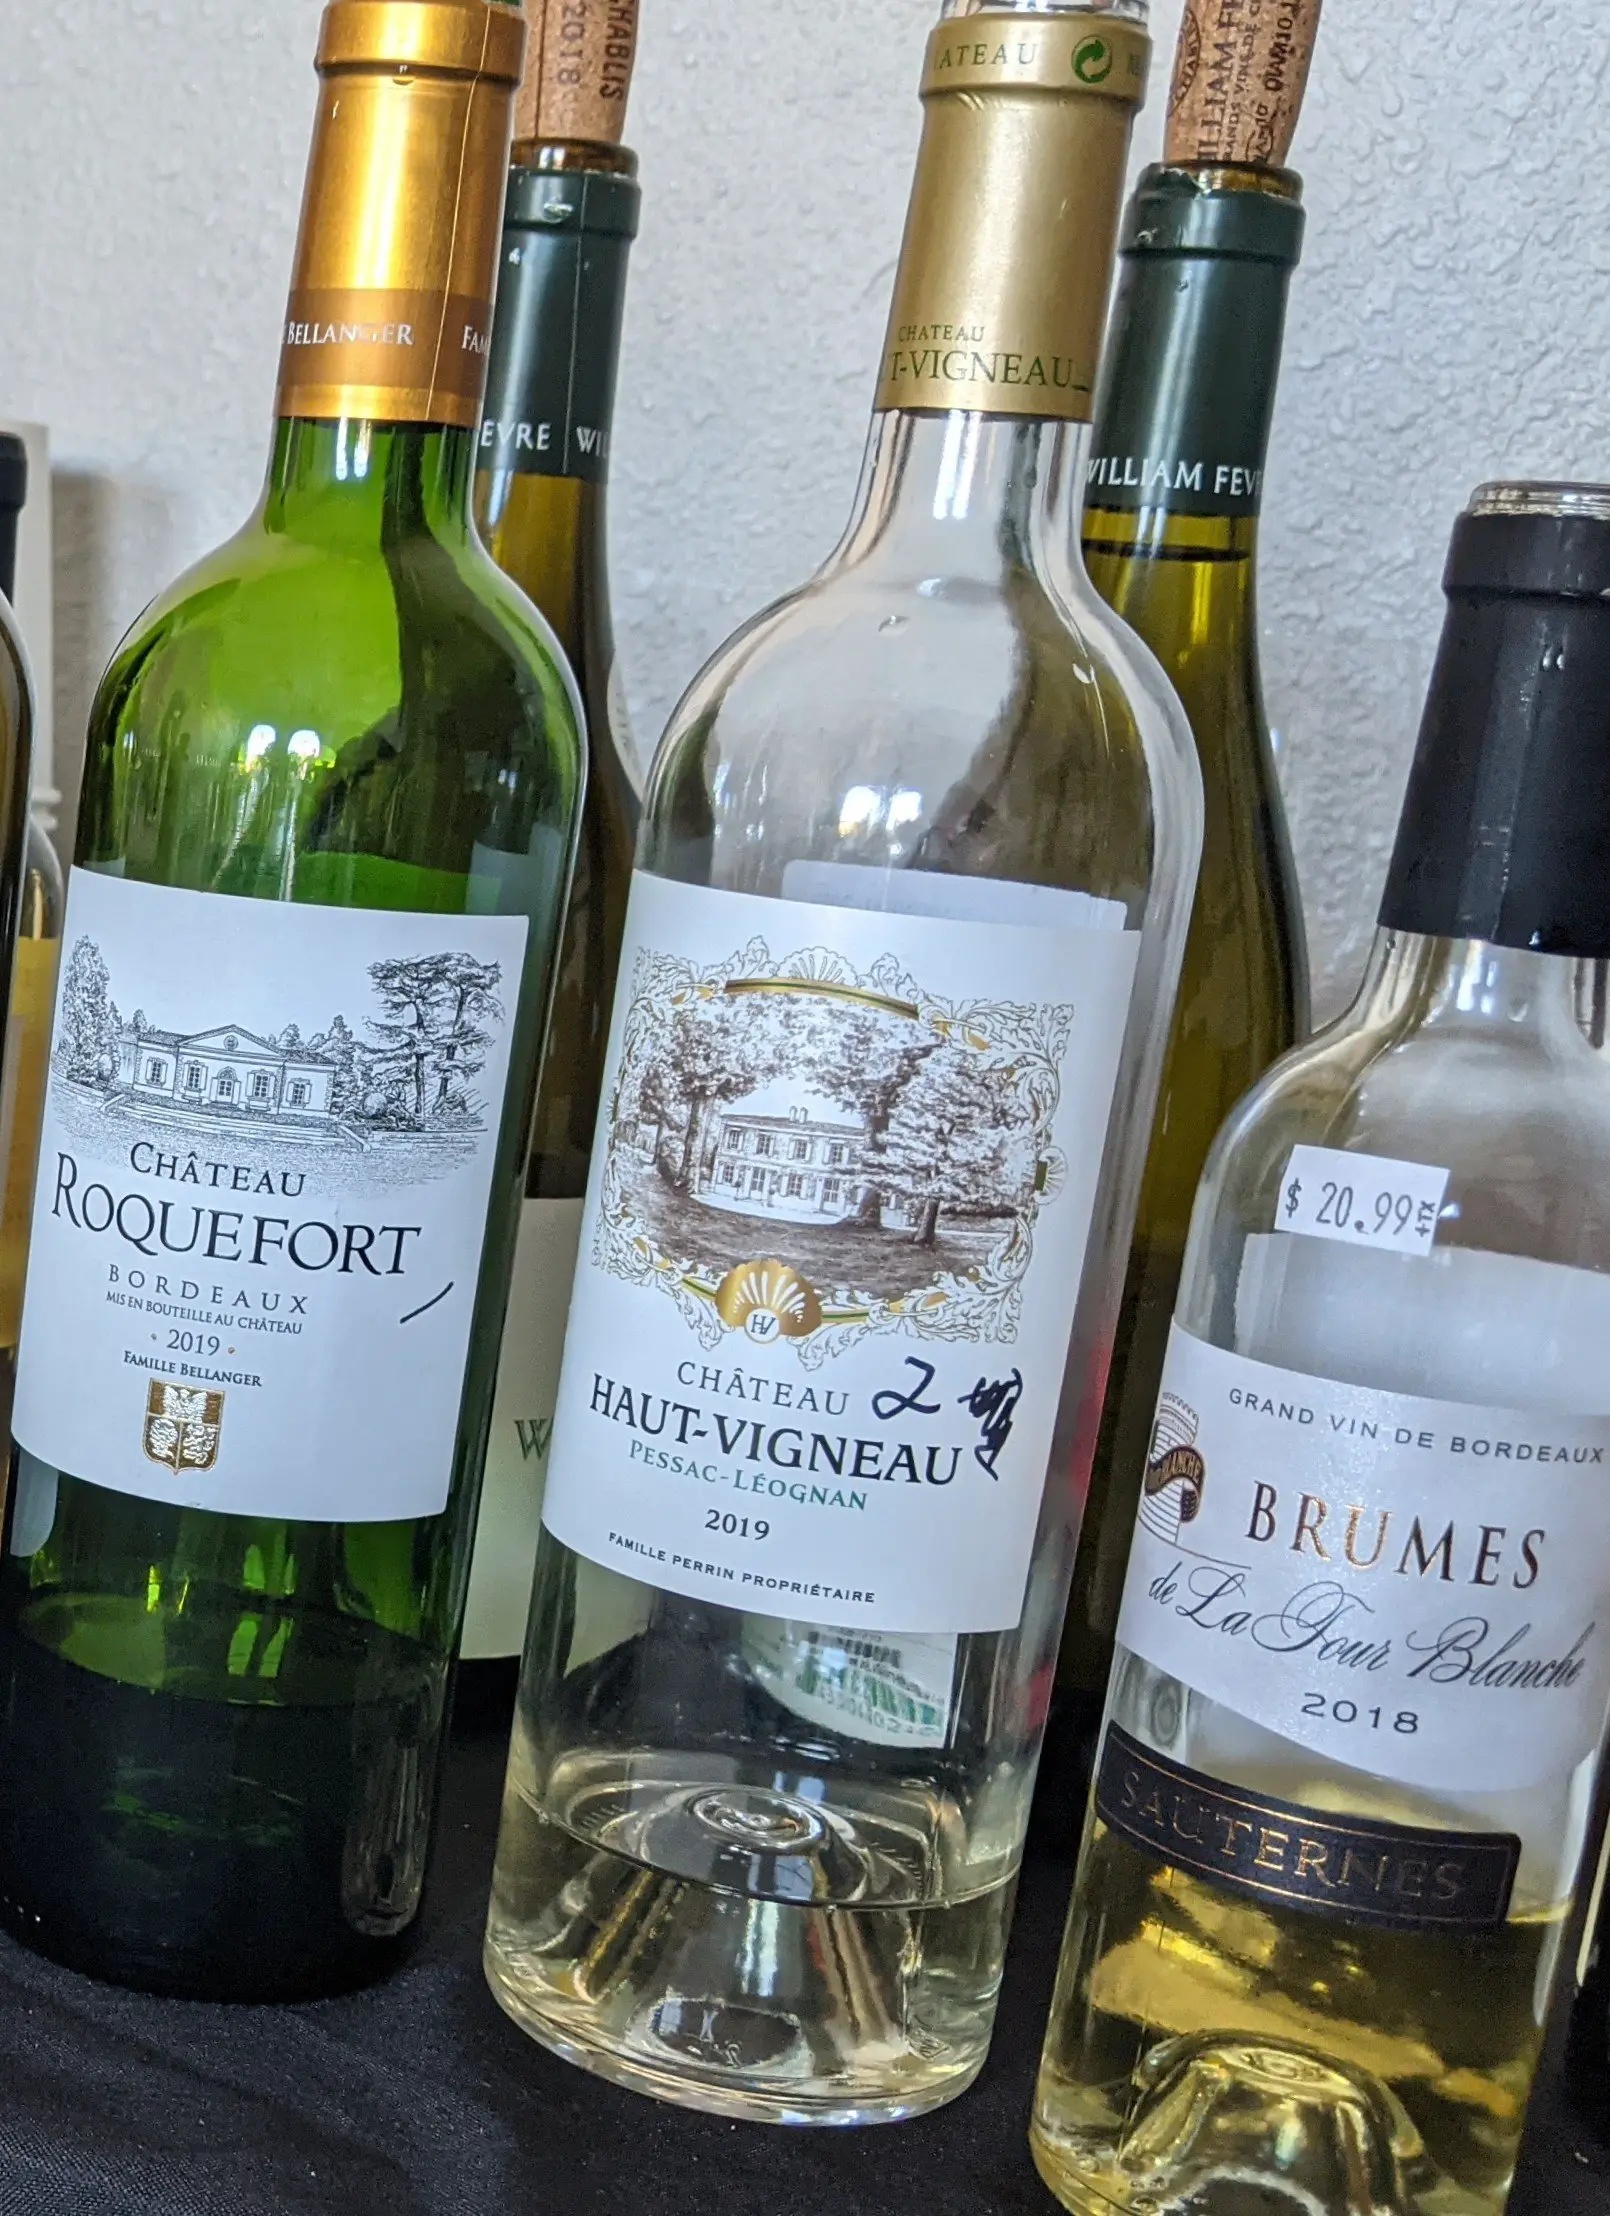 Chateau Haug Vineau Pessac Leognan 2019 - advanced wine tasting class